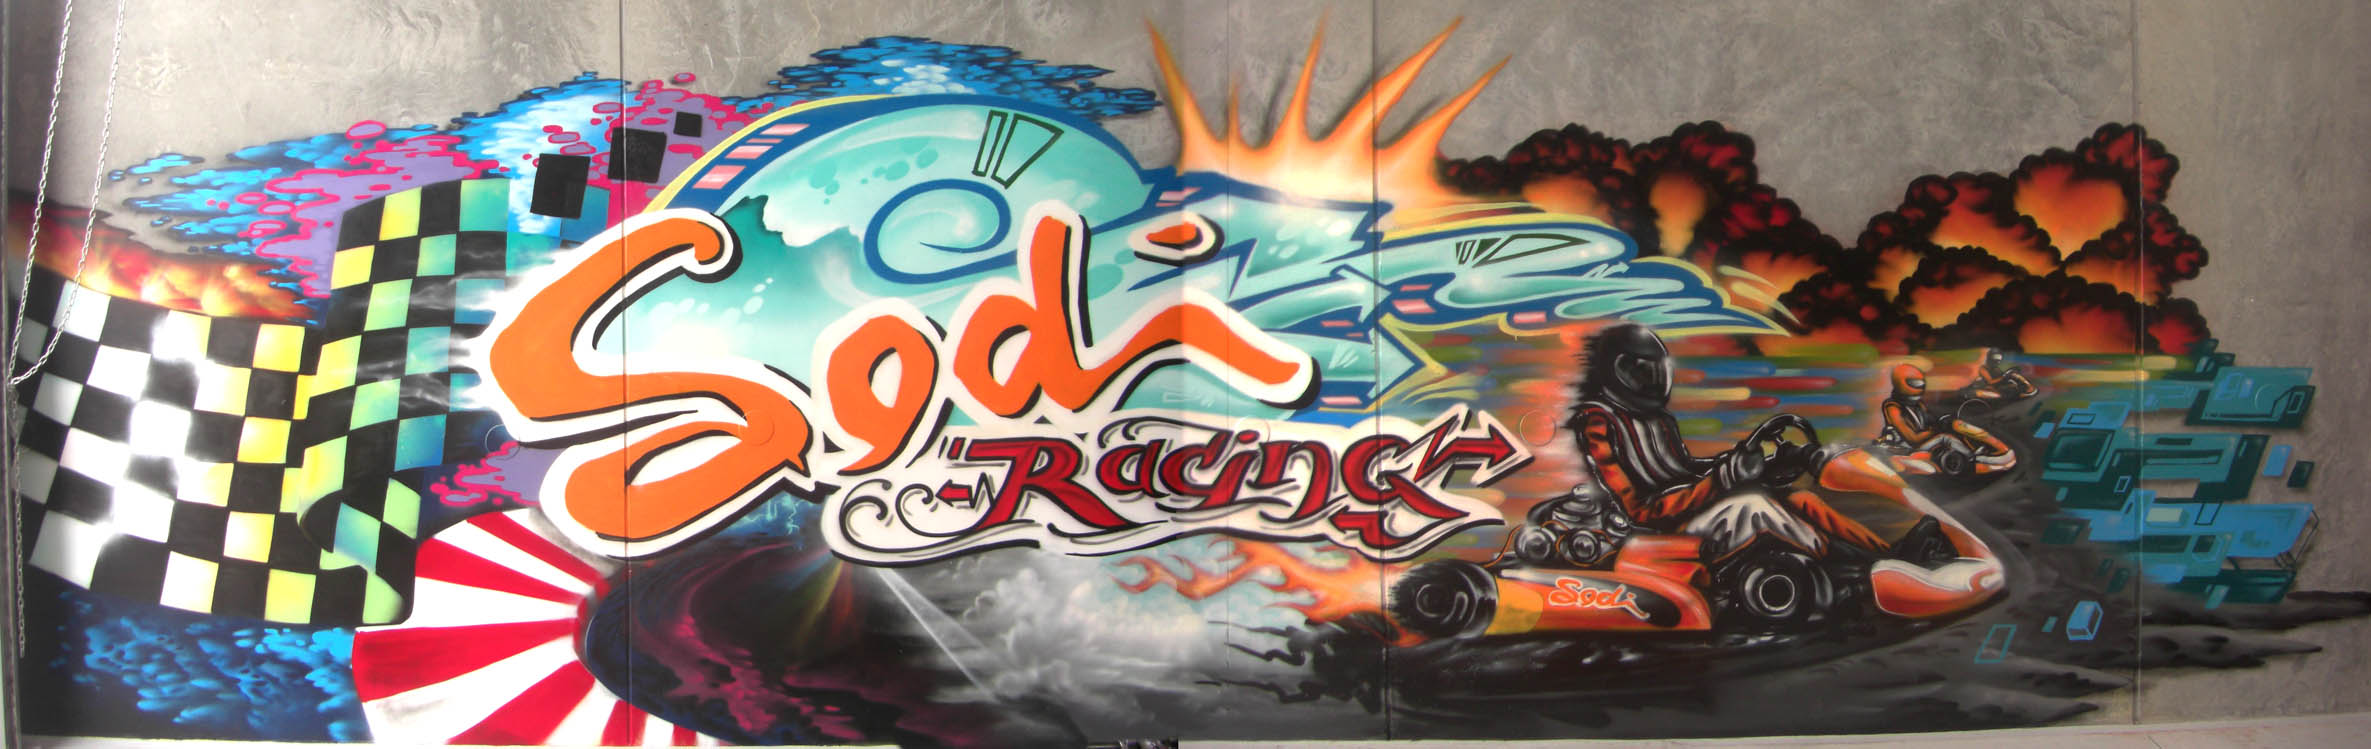 Sodi Kart Auckland graffiti art mural